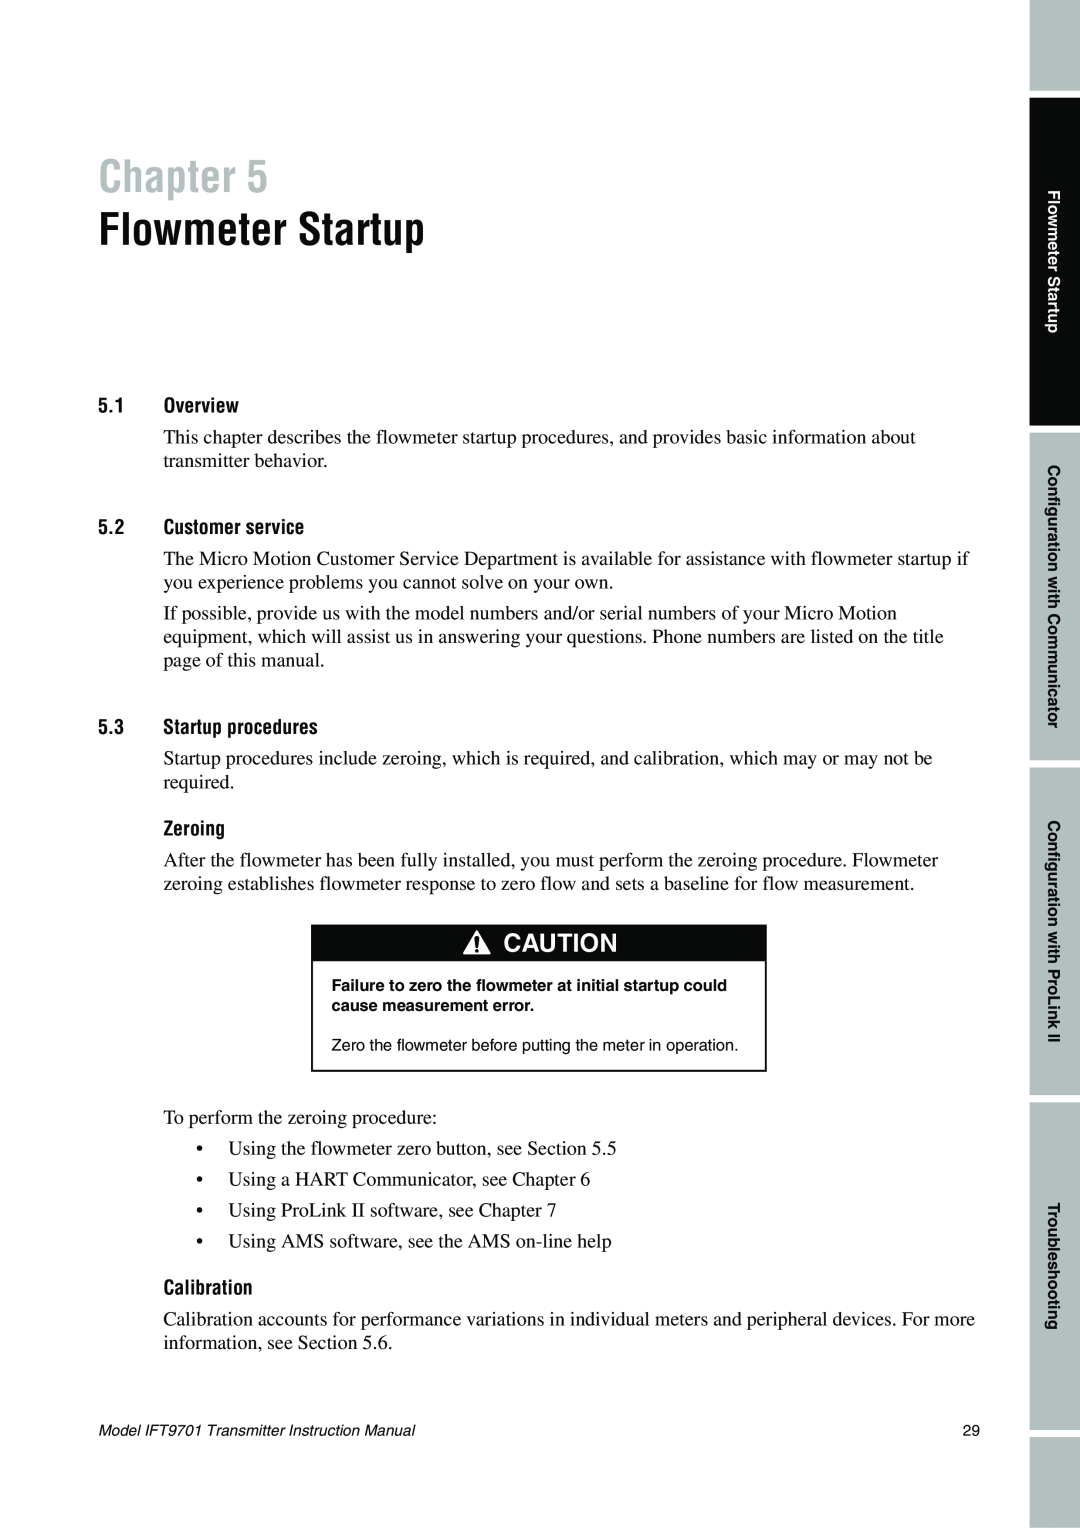 Emerson IFT9701 Flowmeter Startup, Chapter, 5.1Overview, 5.2Customer service, 5.3Startup procedures, Zeroing, Calibration 